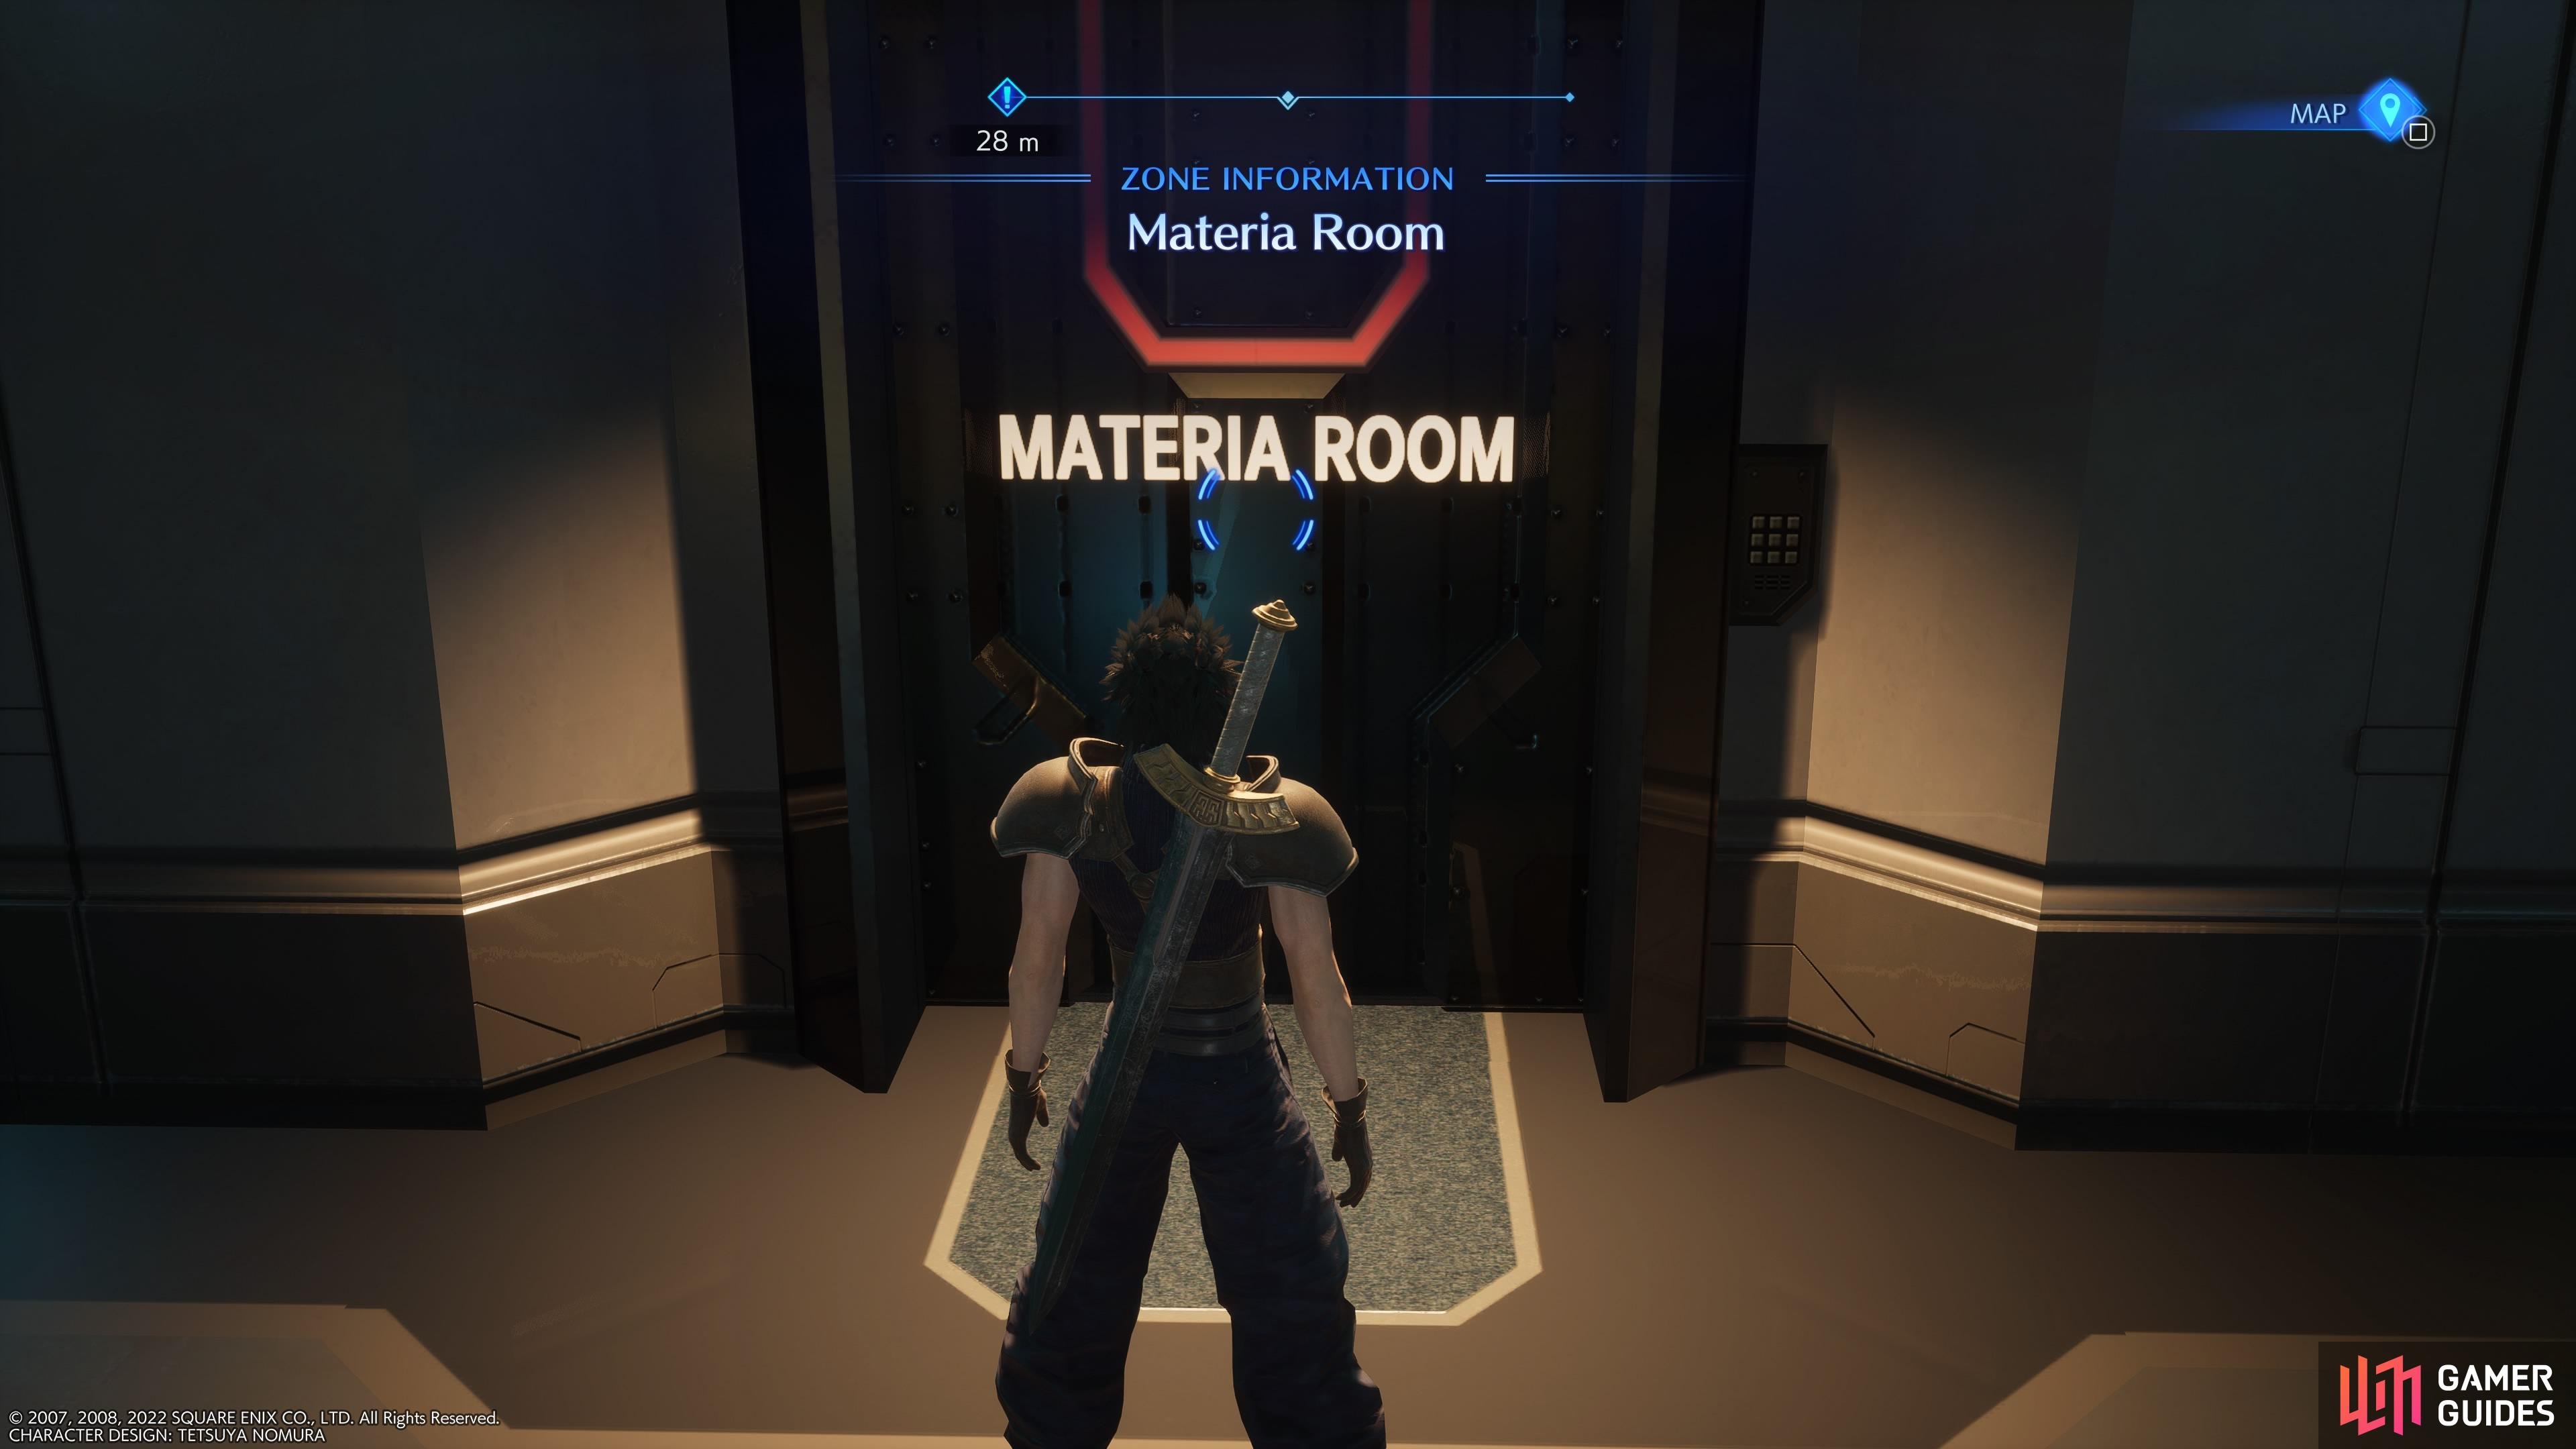 Head inside the Materia Room